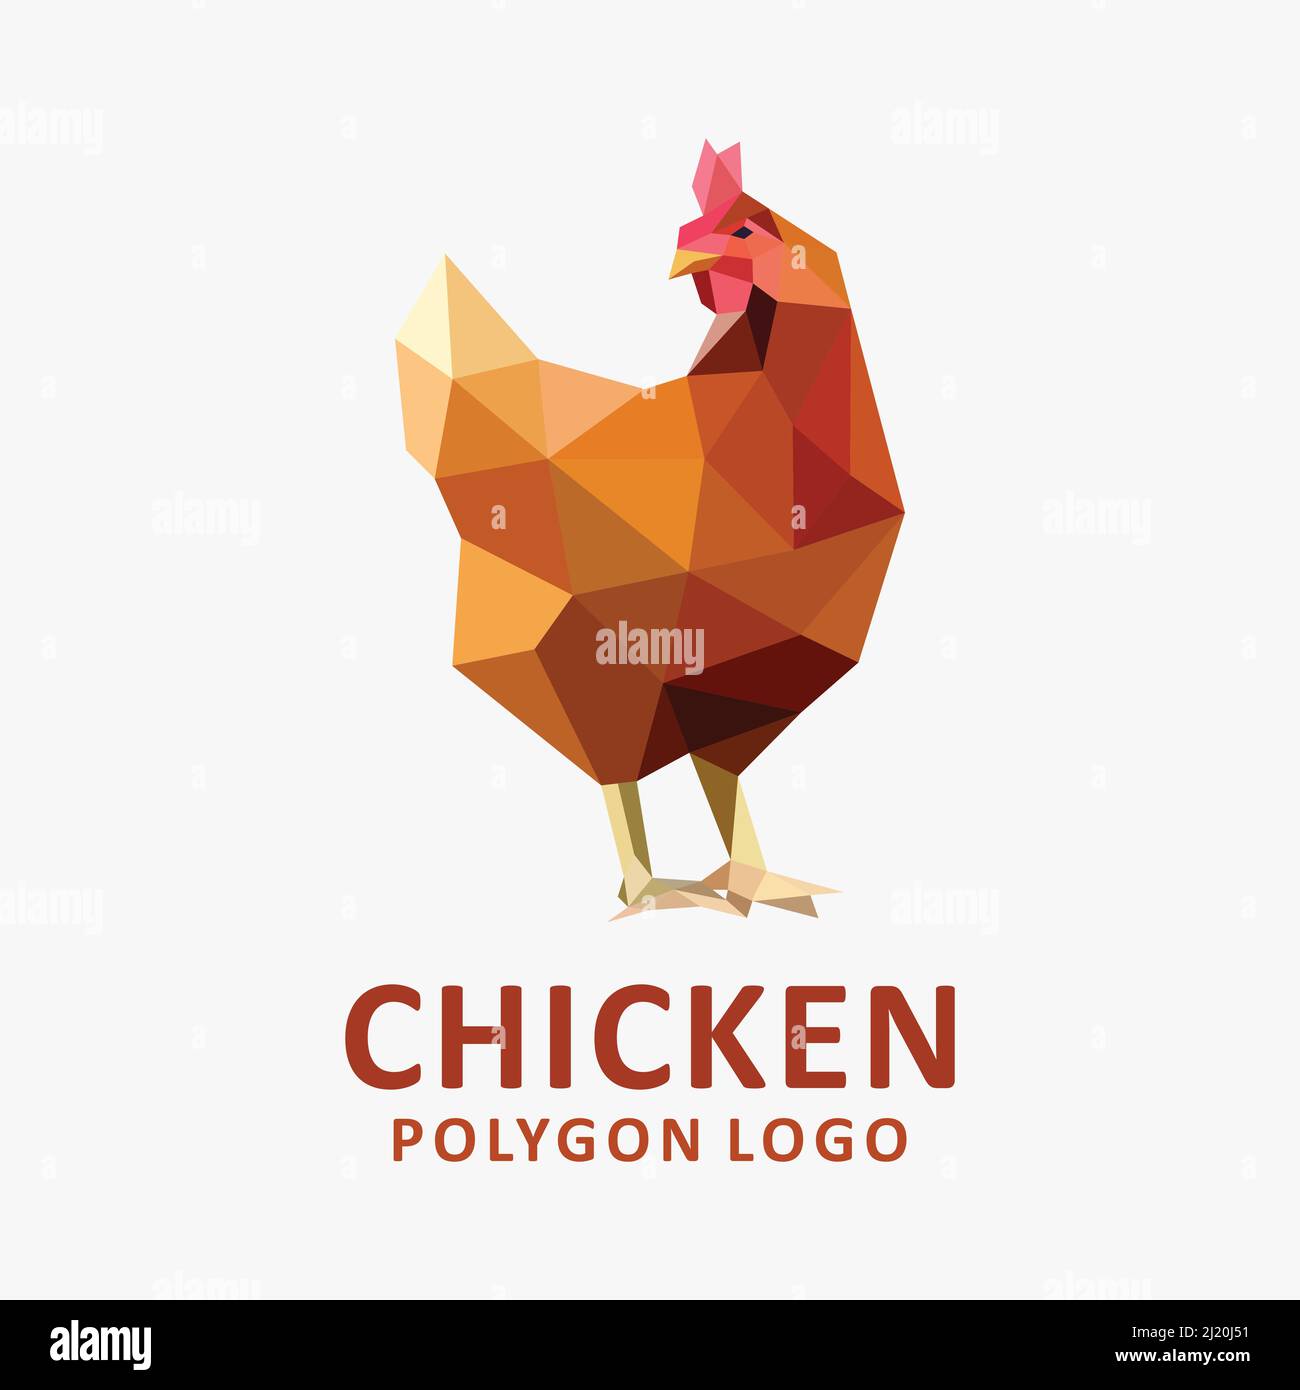 Chicken low poly logo design Stock Vector